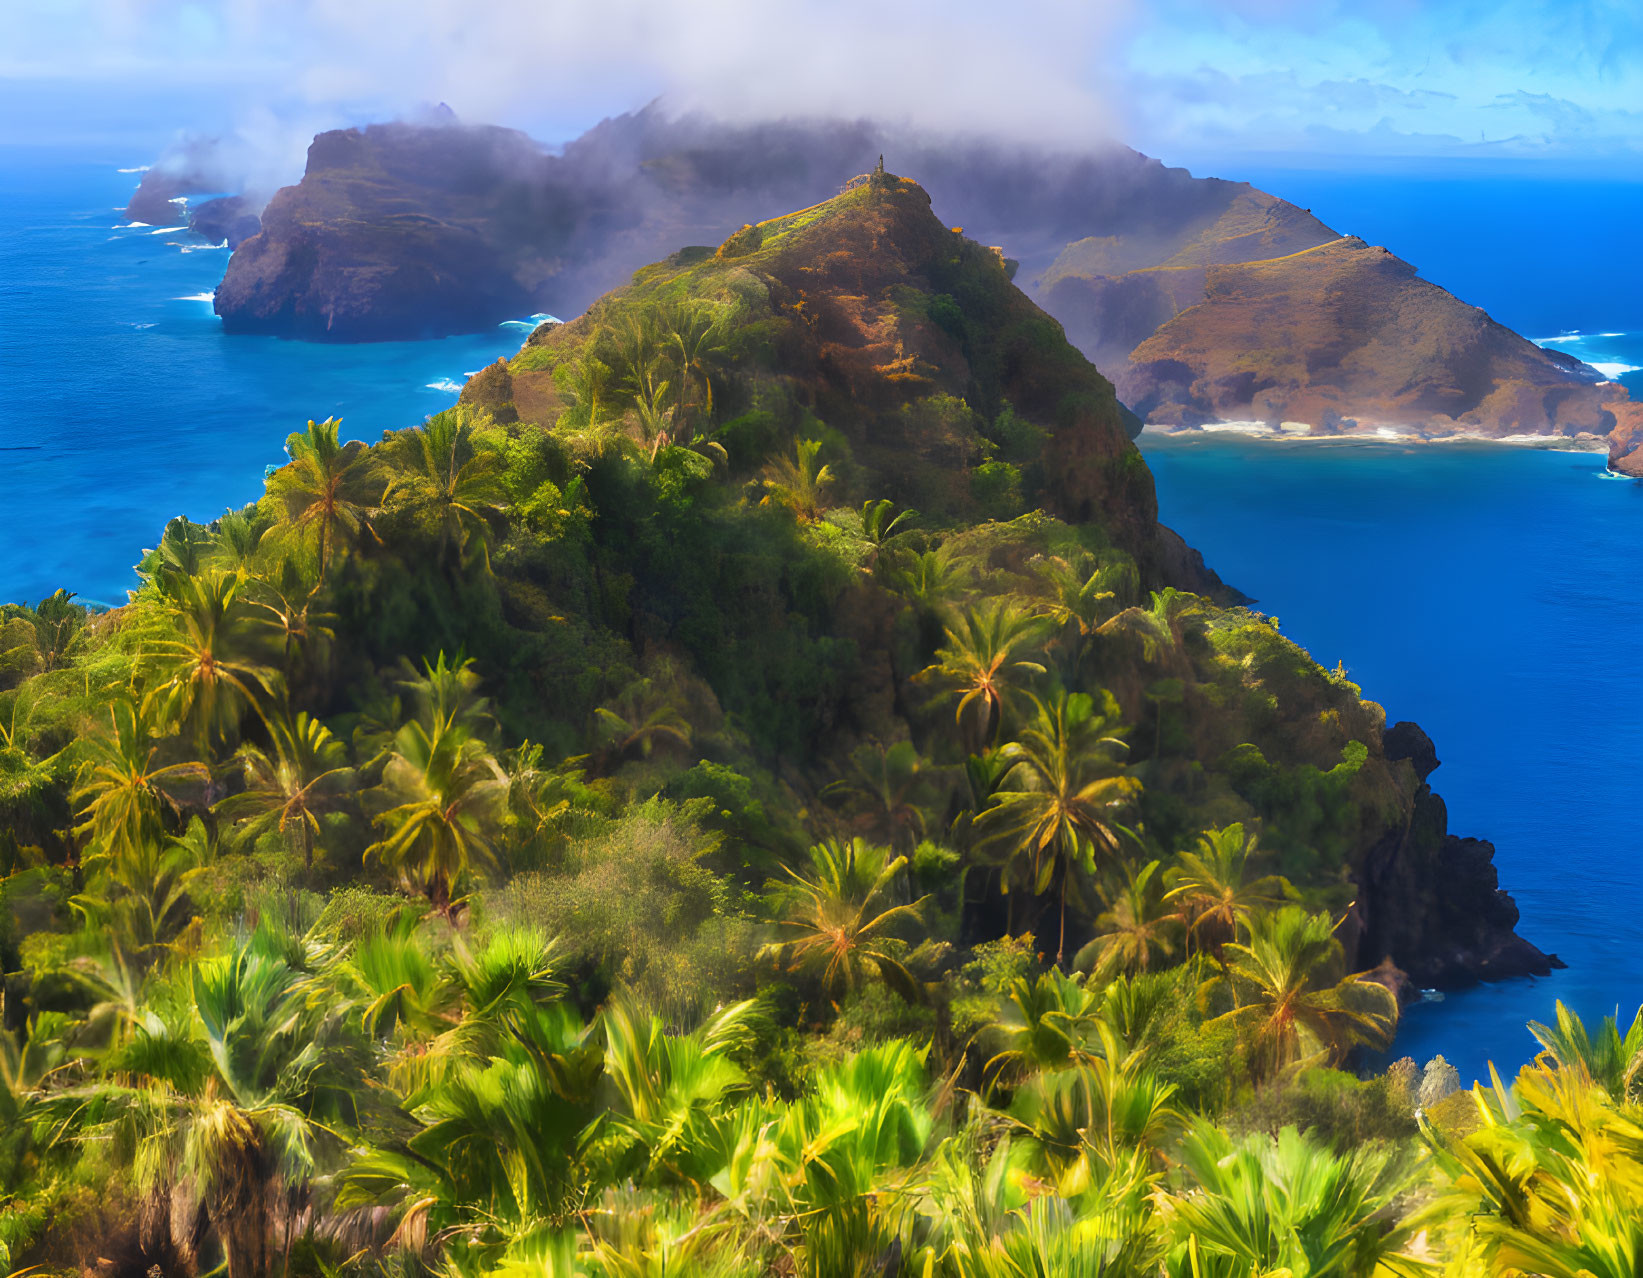 Fantasy oceanic islands